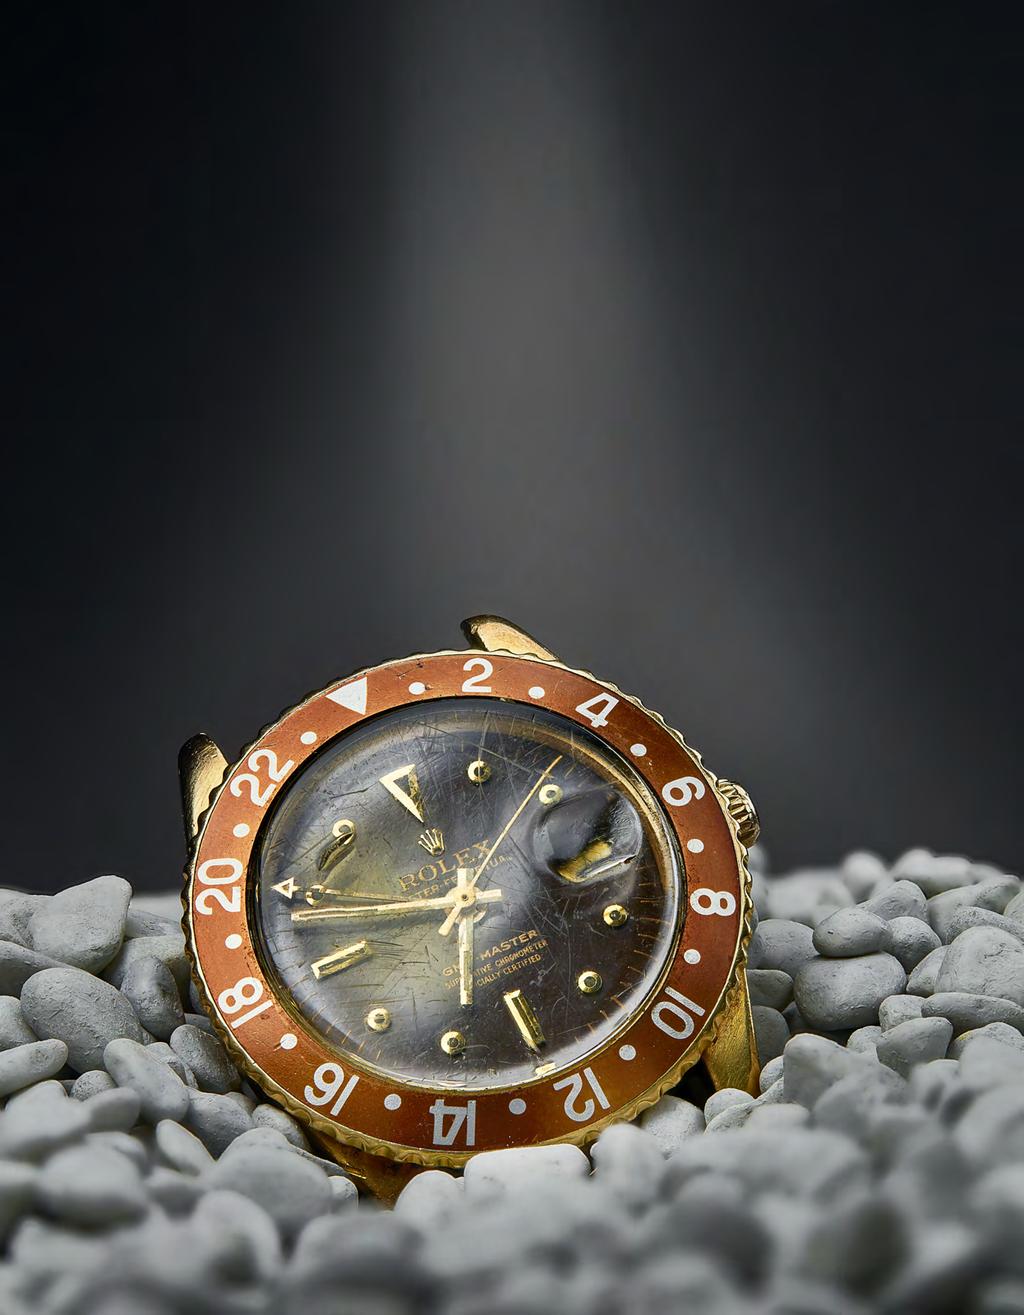 50 Lyon & Turnbull 250 ROLEX - A gentleman s 18ct gold watch GMT MASTER - circa 1967, plain yellow gold, bronze coloured rotating bezel, brown dial, date aperture, gilt hands, screw down crown, no